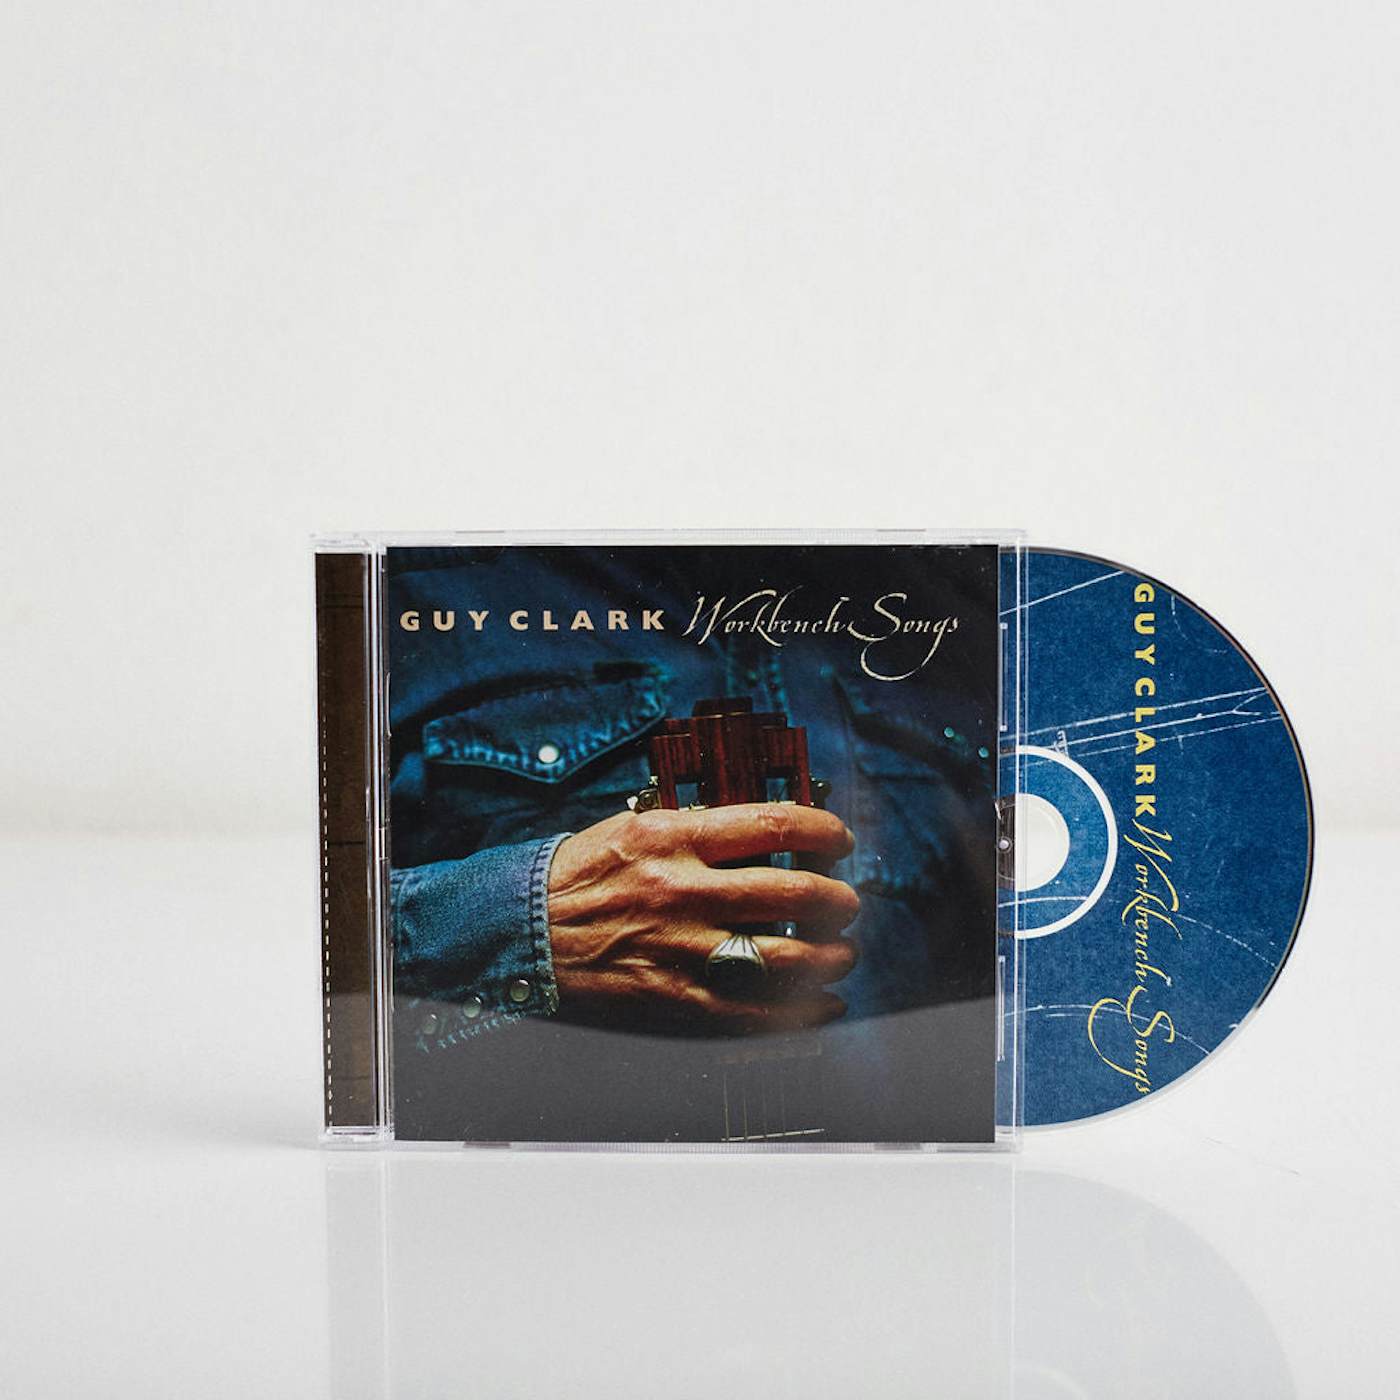 Guy Clark Workbench Songs (CD)